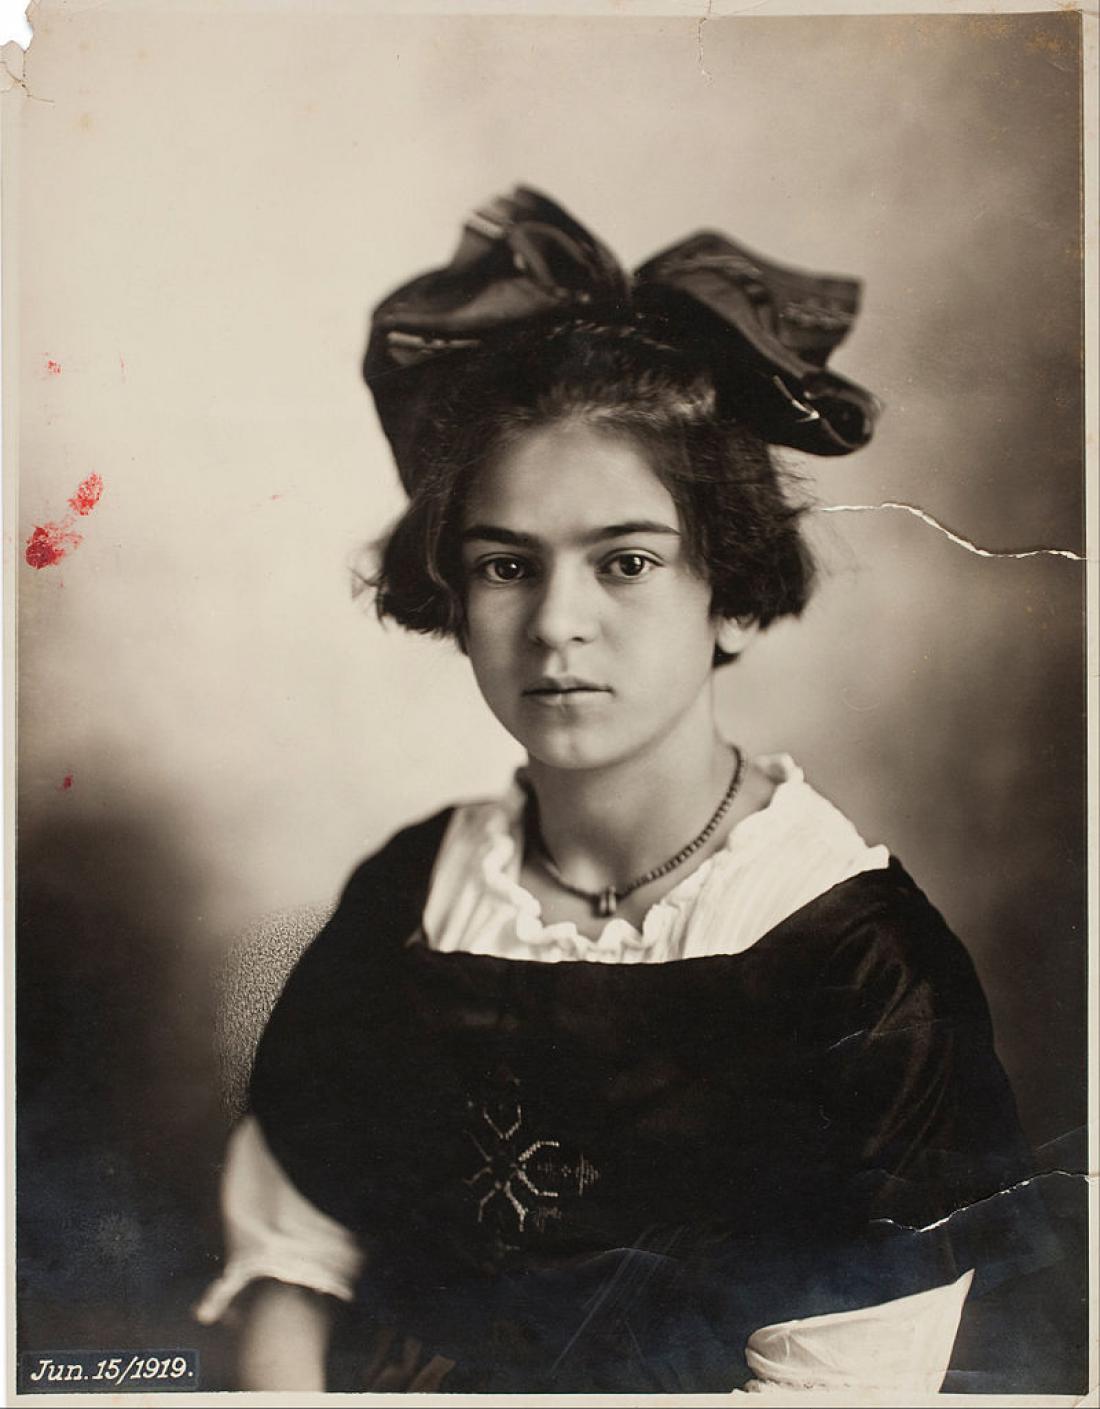 Frida Kahlo v mlajših letih. Foto: Guillermo Kahlo, javna last